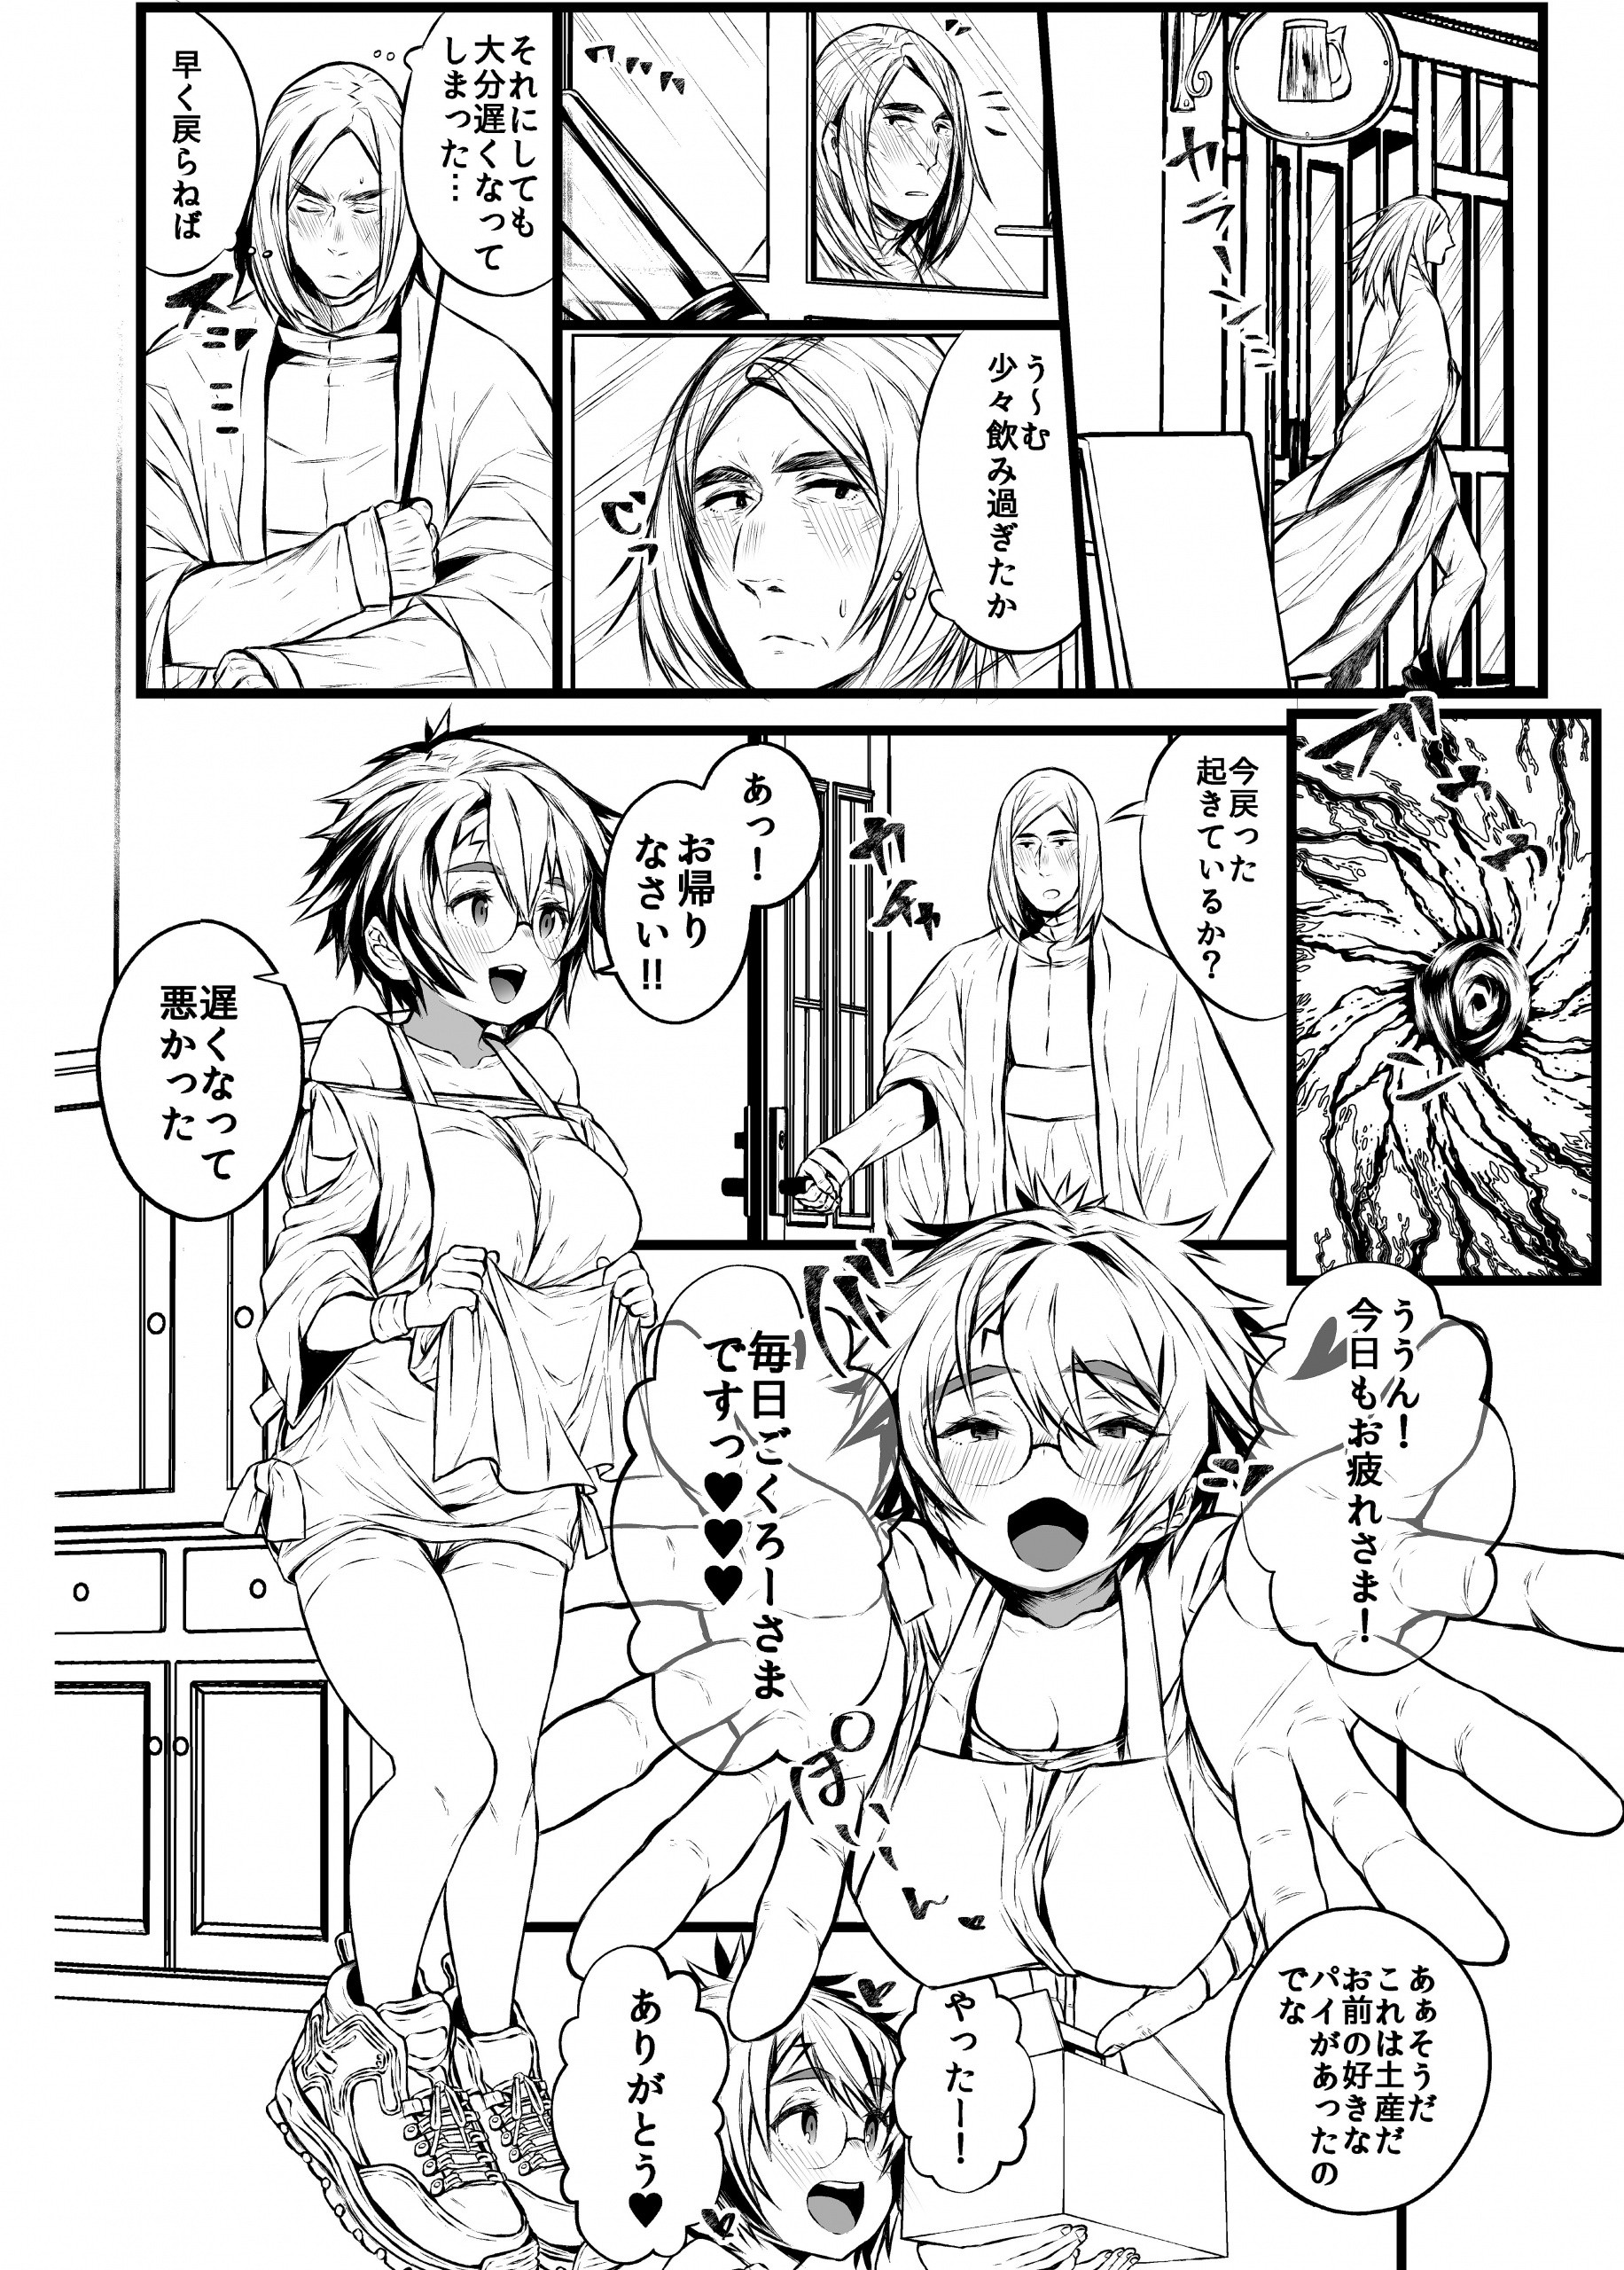 Love's Mycovy Preparation hentai manga picture 49